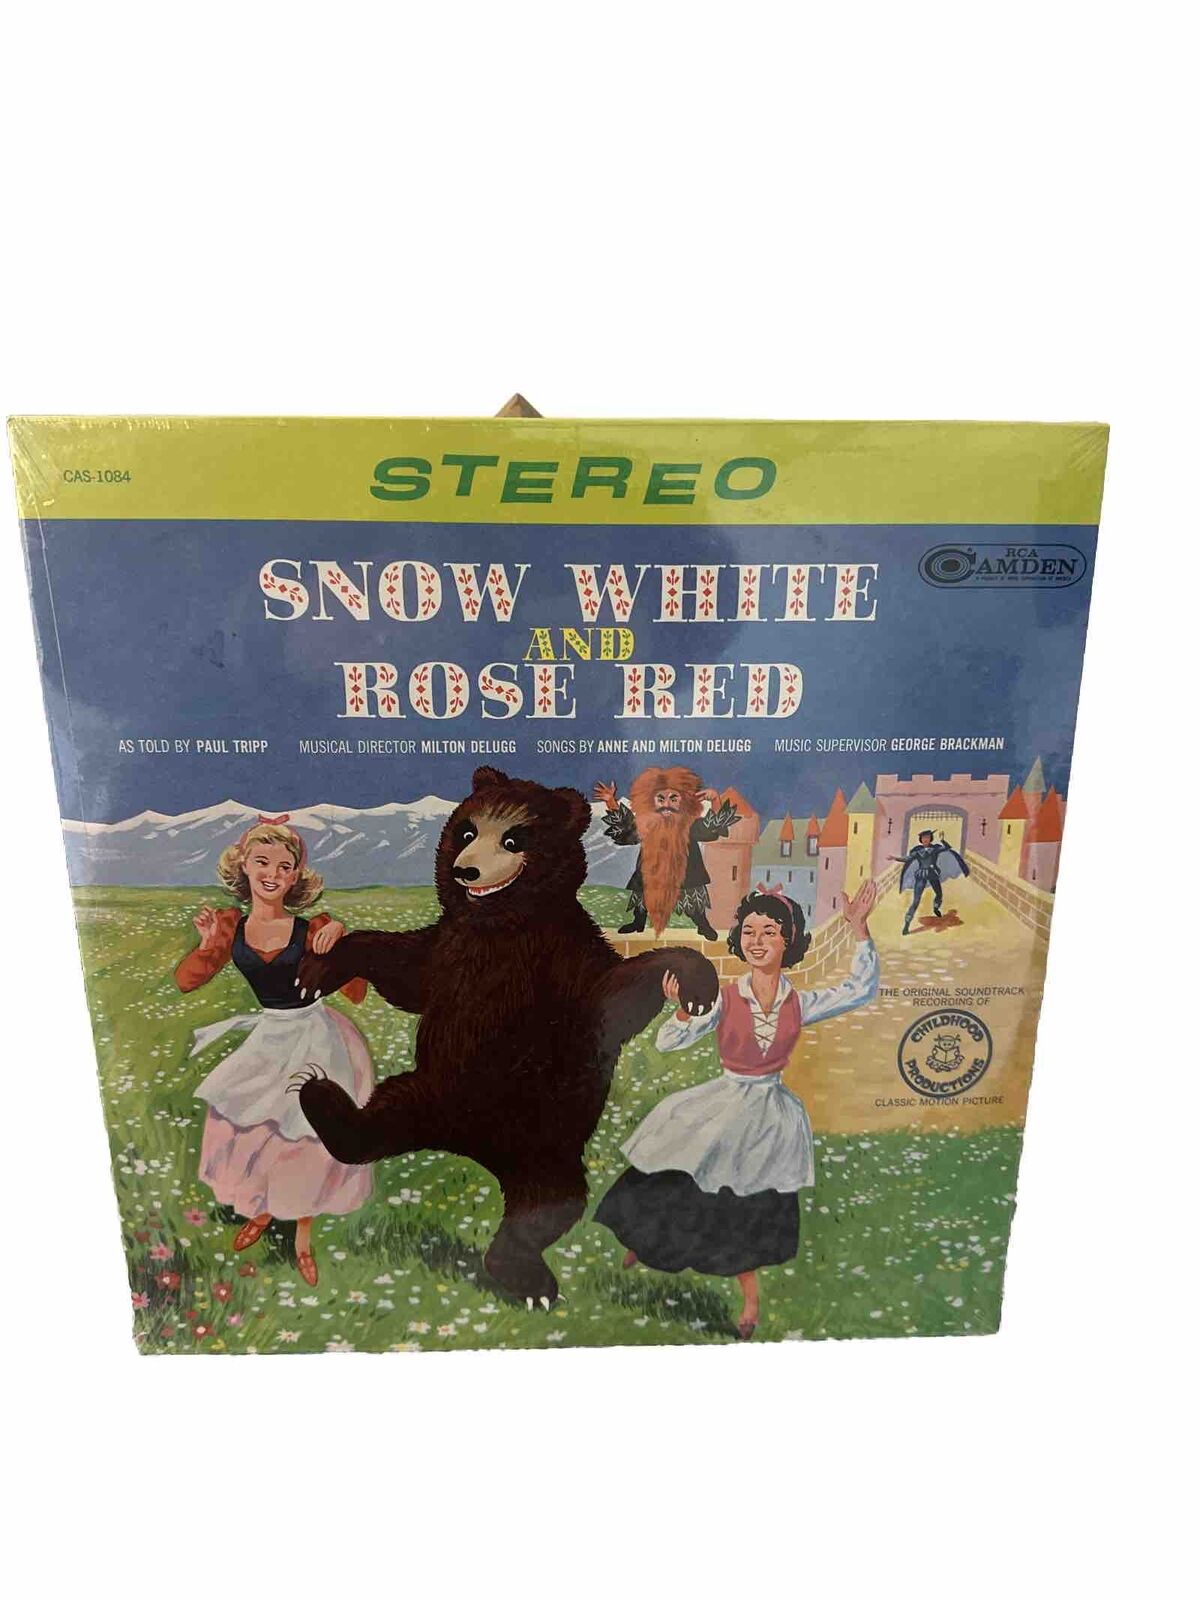 Sealed Vintage 1966 Vinyl LP Children’s Record - Snow White and Rose Red